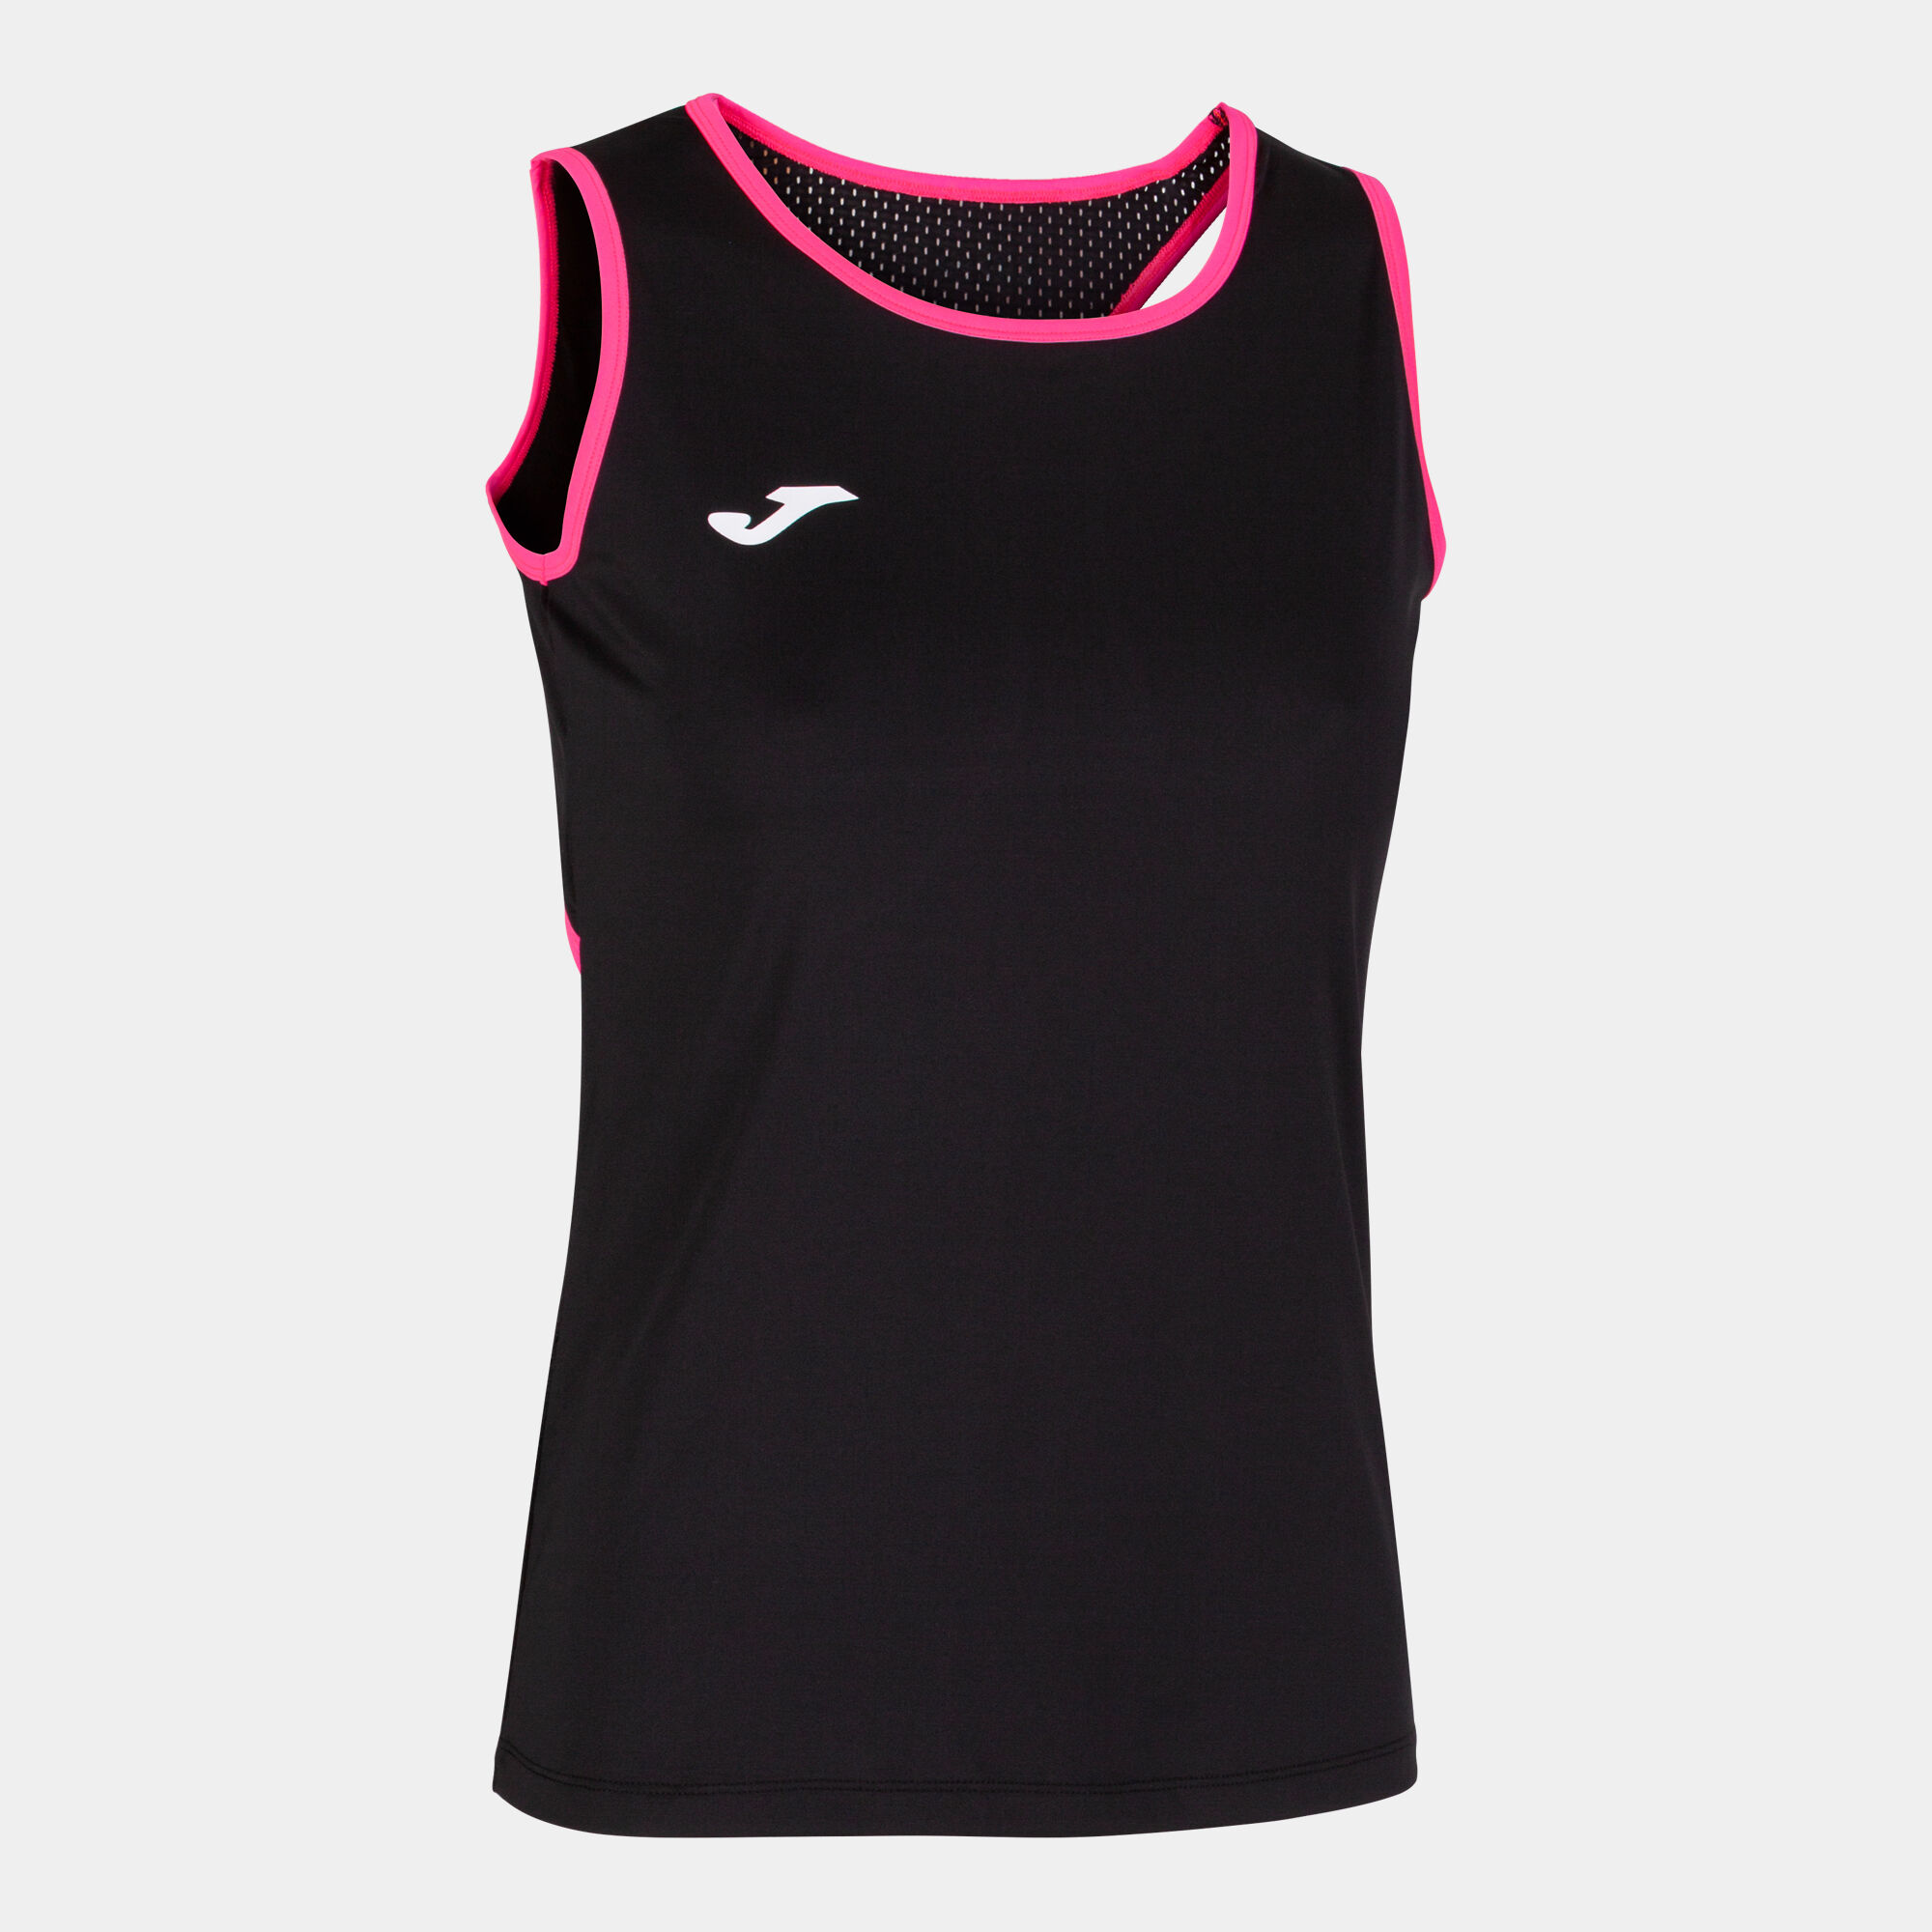 Camiseta tirantes mujer Break negro rosa flúor